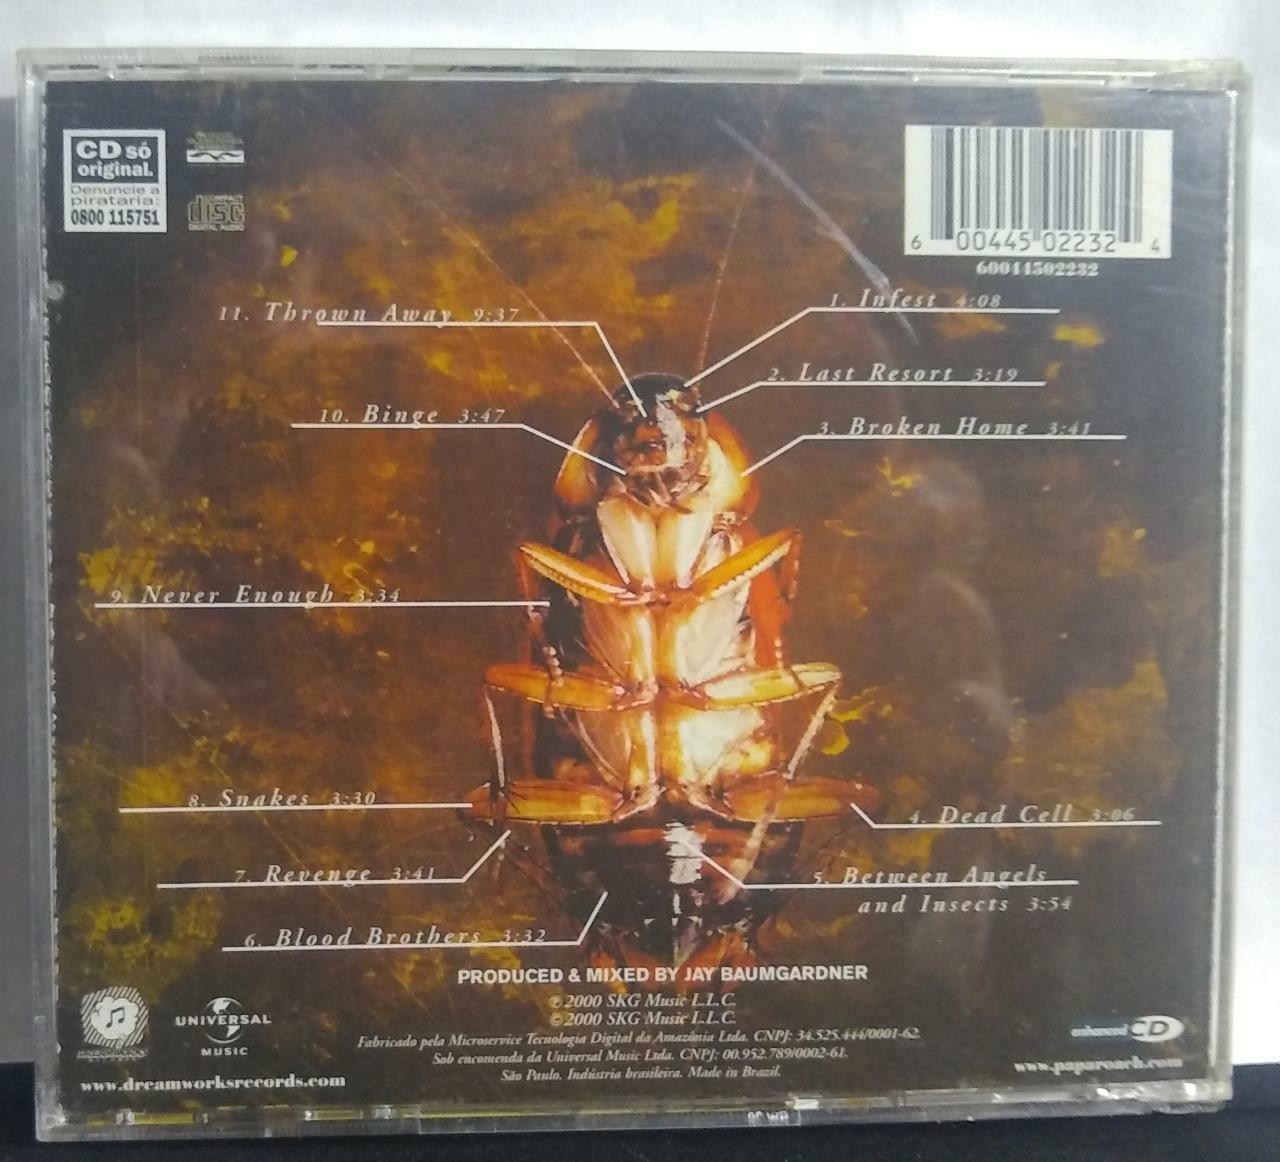 CD - Papa Roach - Infest